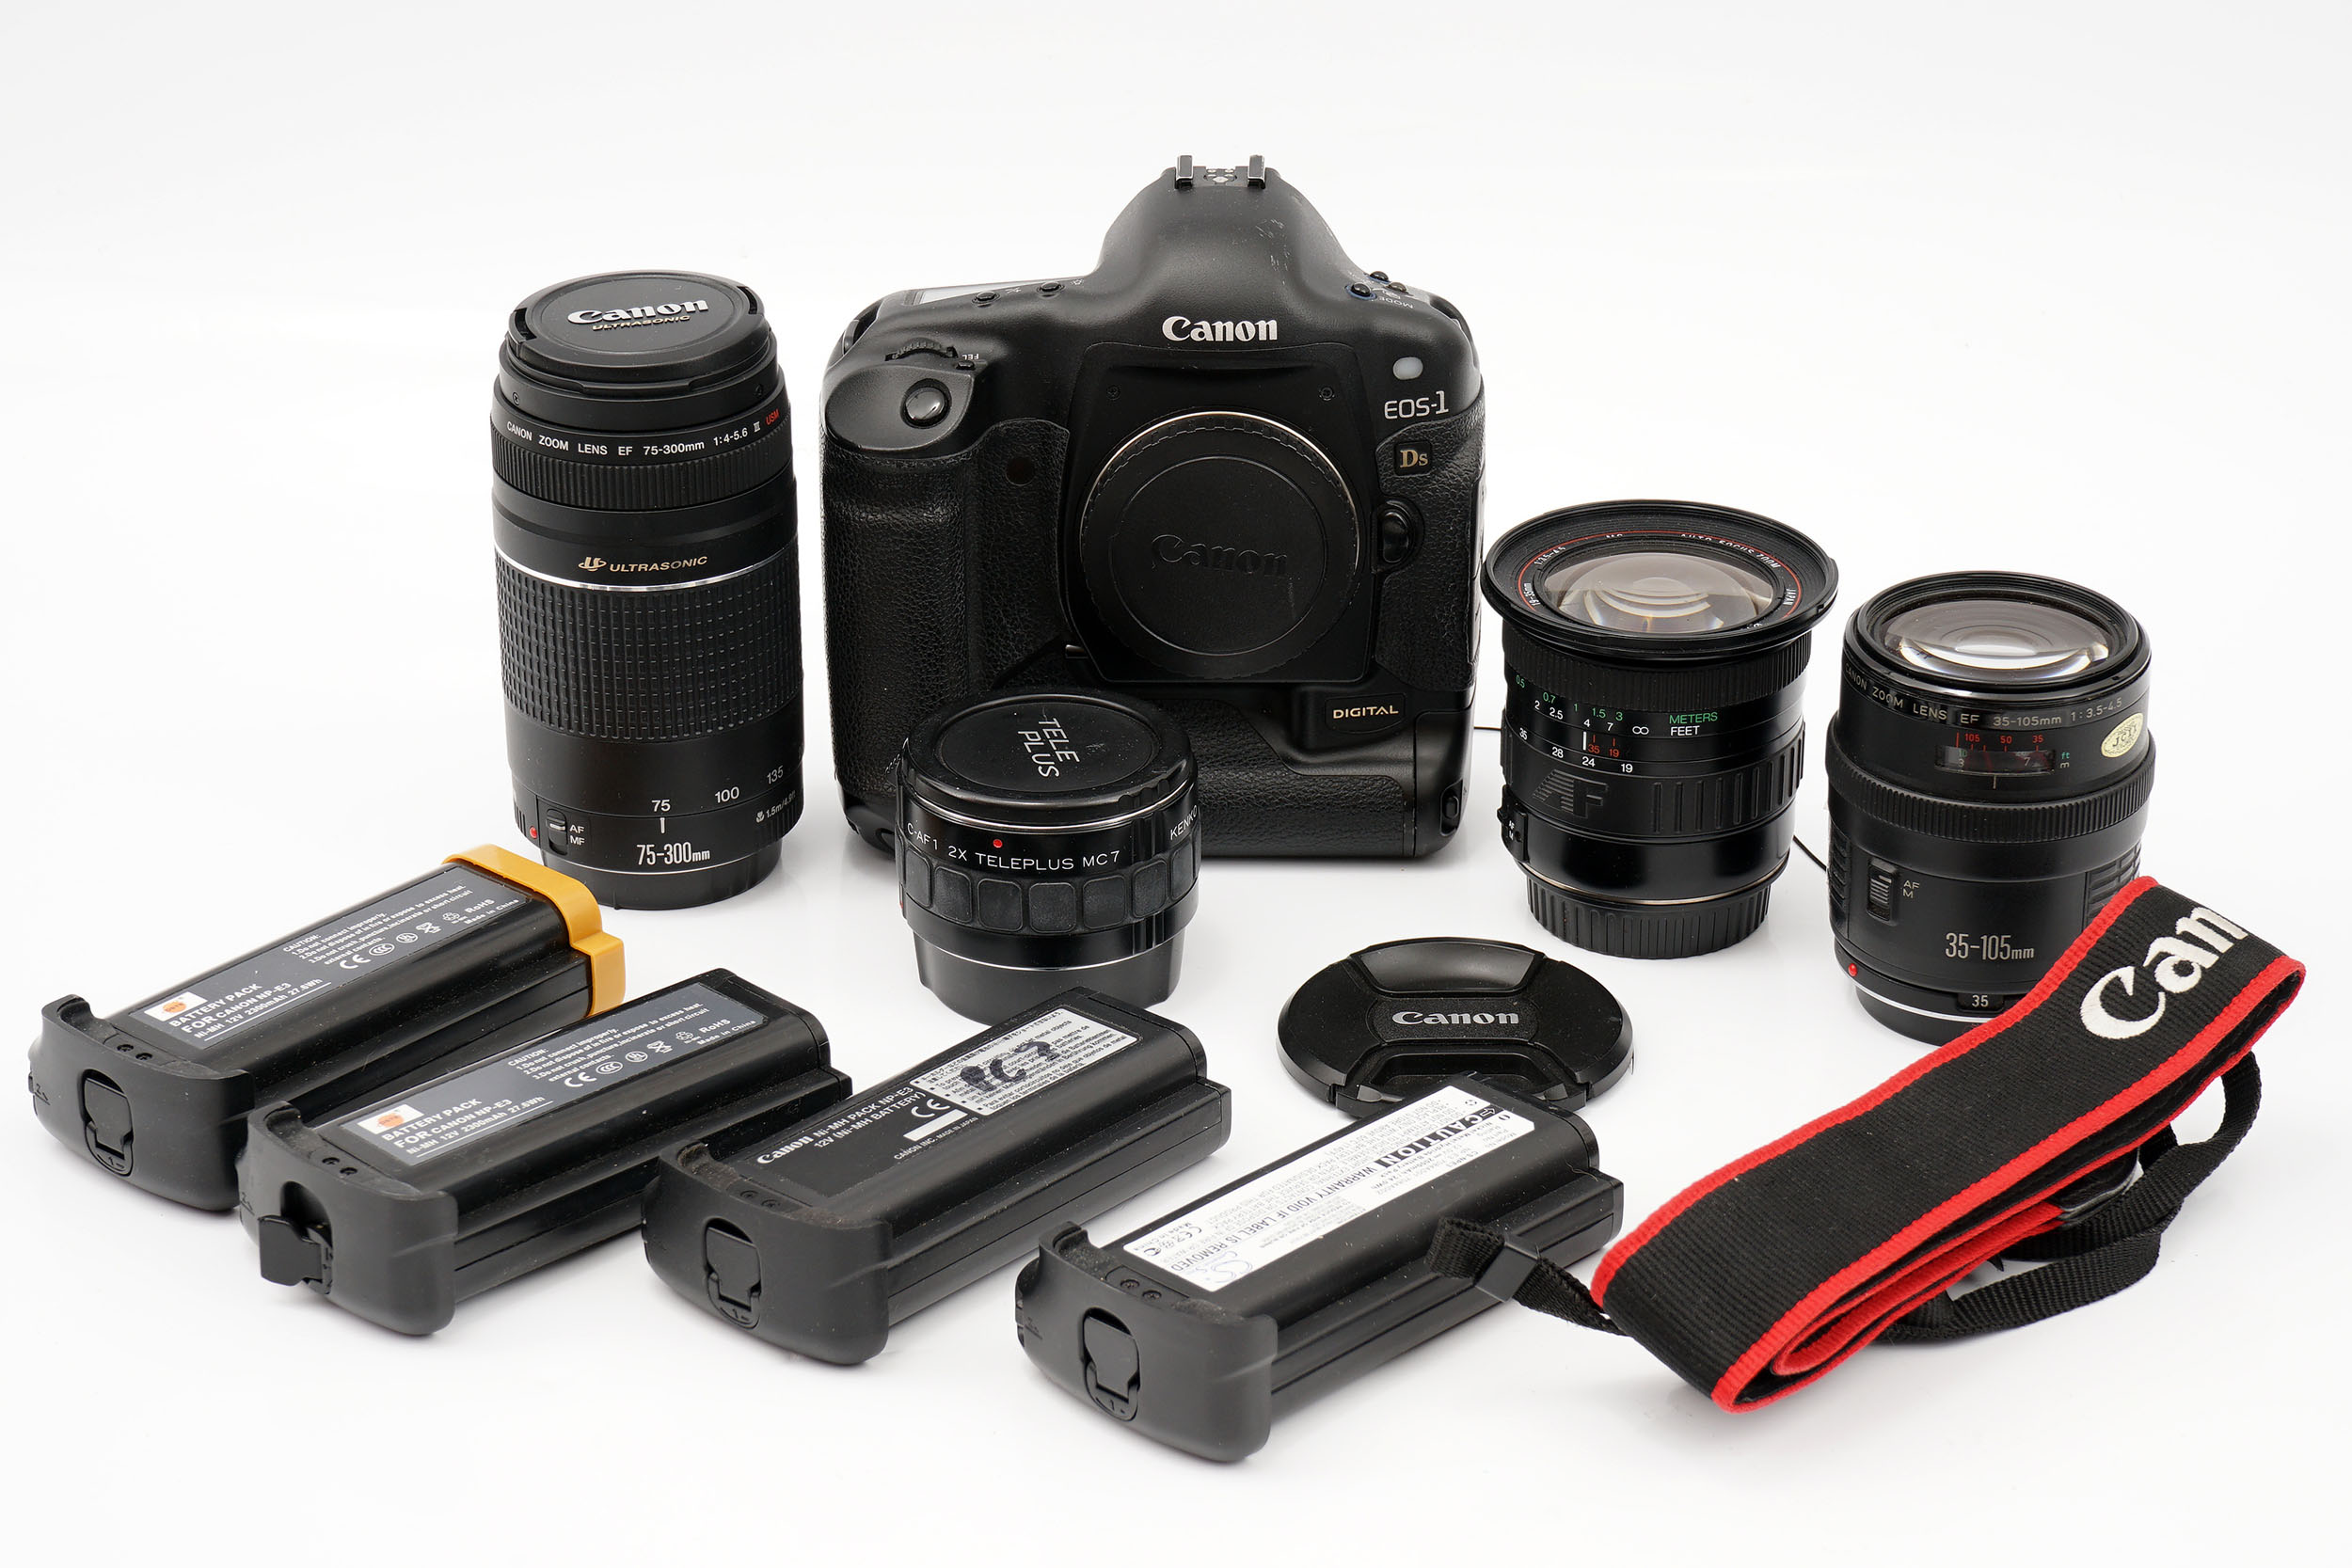 A Canon EOS 1Ds Digital SLR Camera,